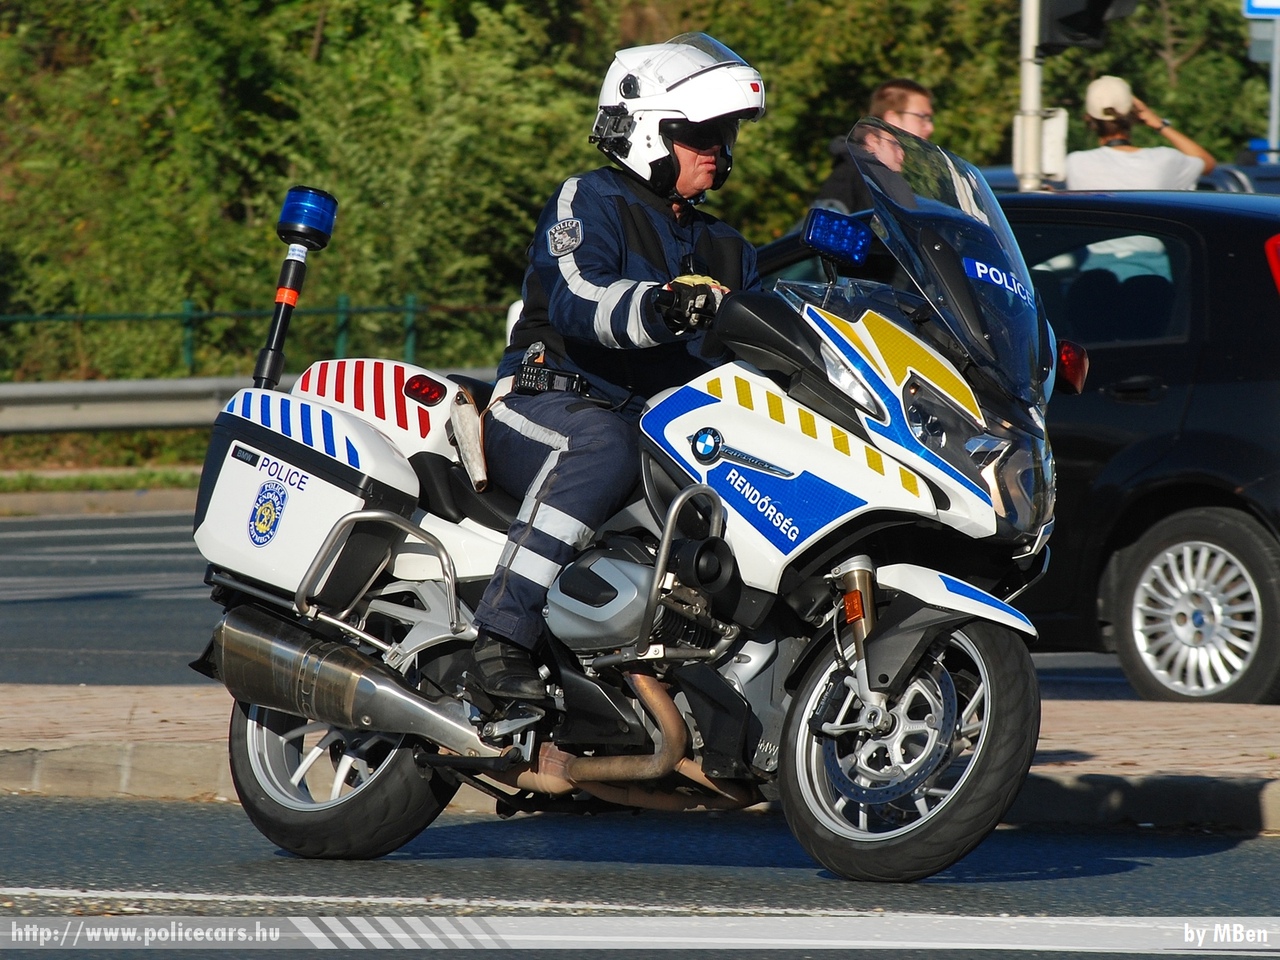 BMW R1200RT-P-LC, fotó: MBen
Keywords: motor rendőr rendőrmotor rendőrség magyar Magyarország police Hungary hungarian policebike policemotorcycle